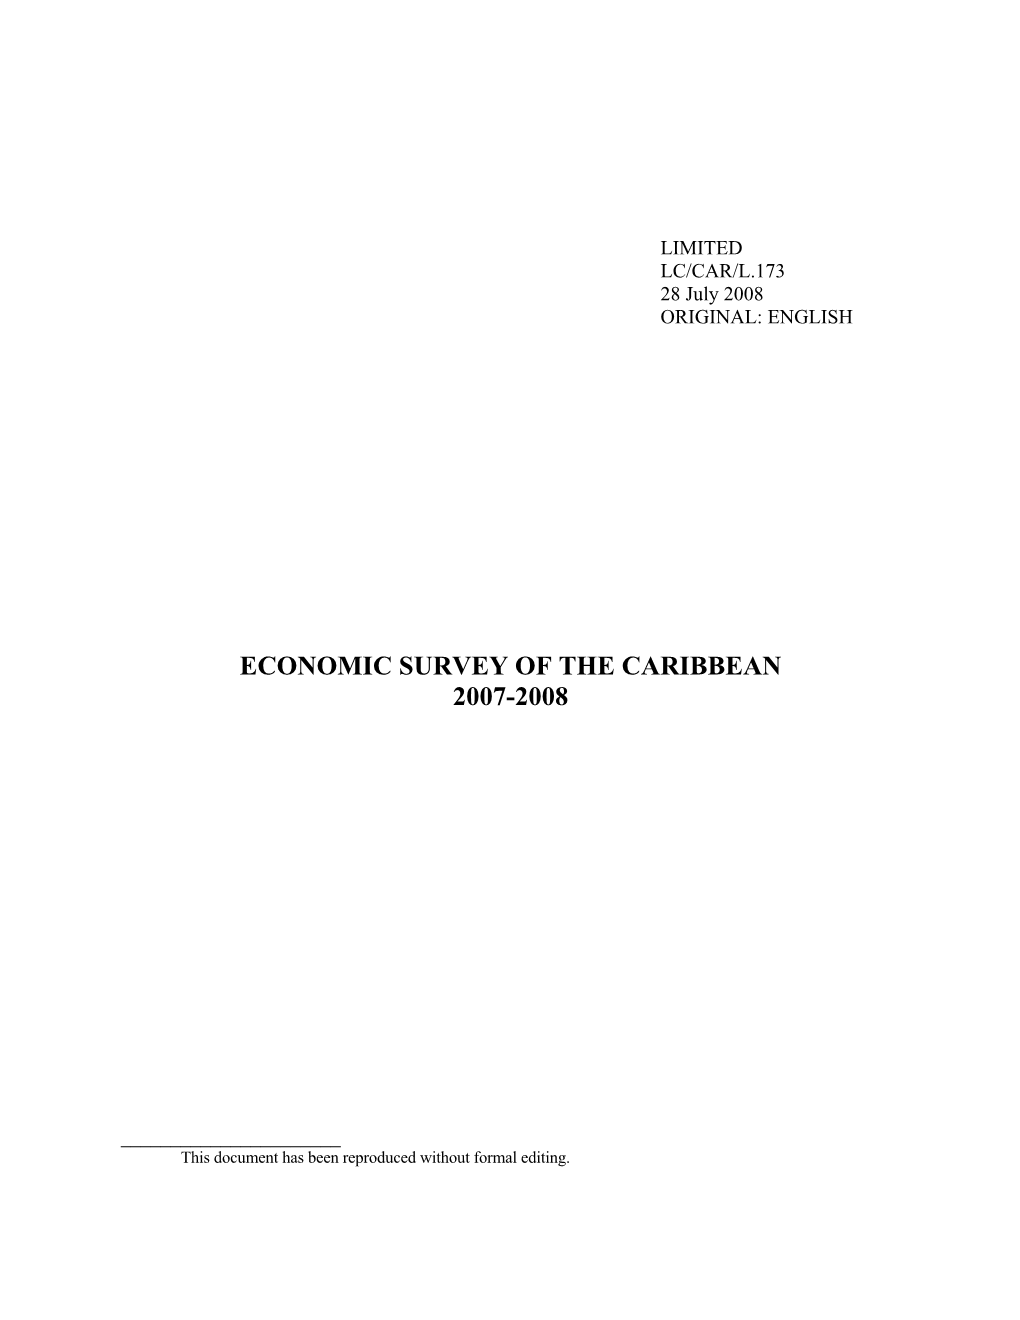 Economic Survey of the Caribbean 2007-2008